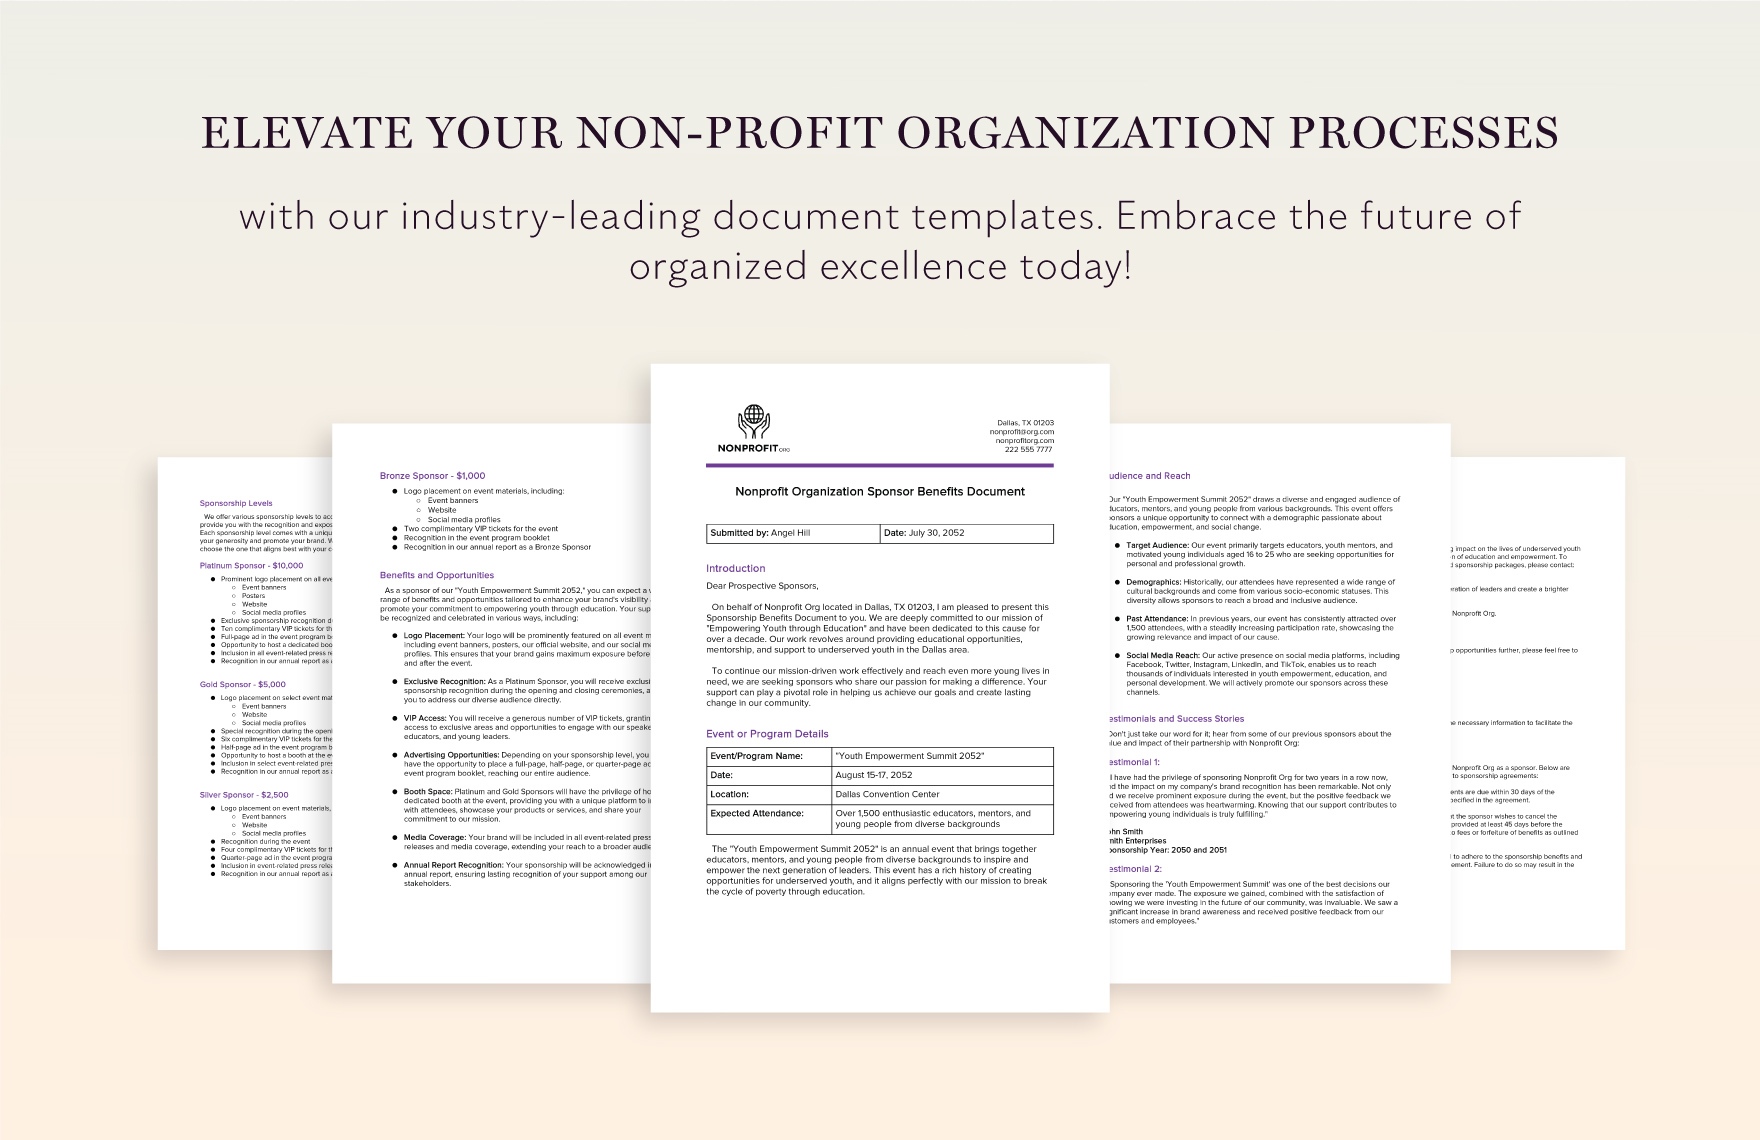 Nonprofit Organization Sponsor Benefits Document Template